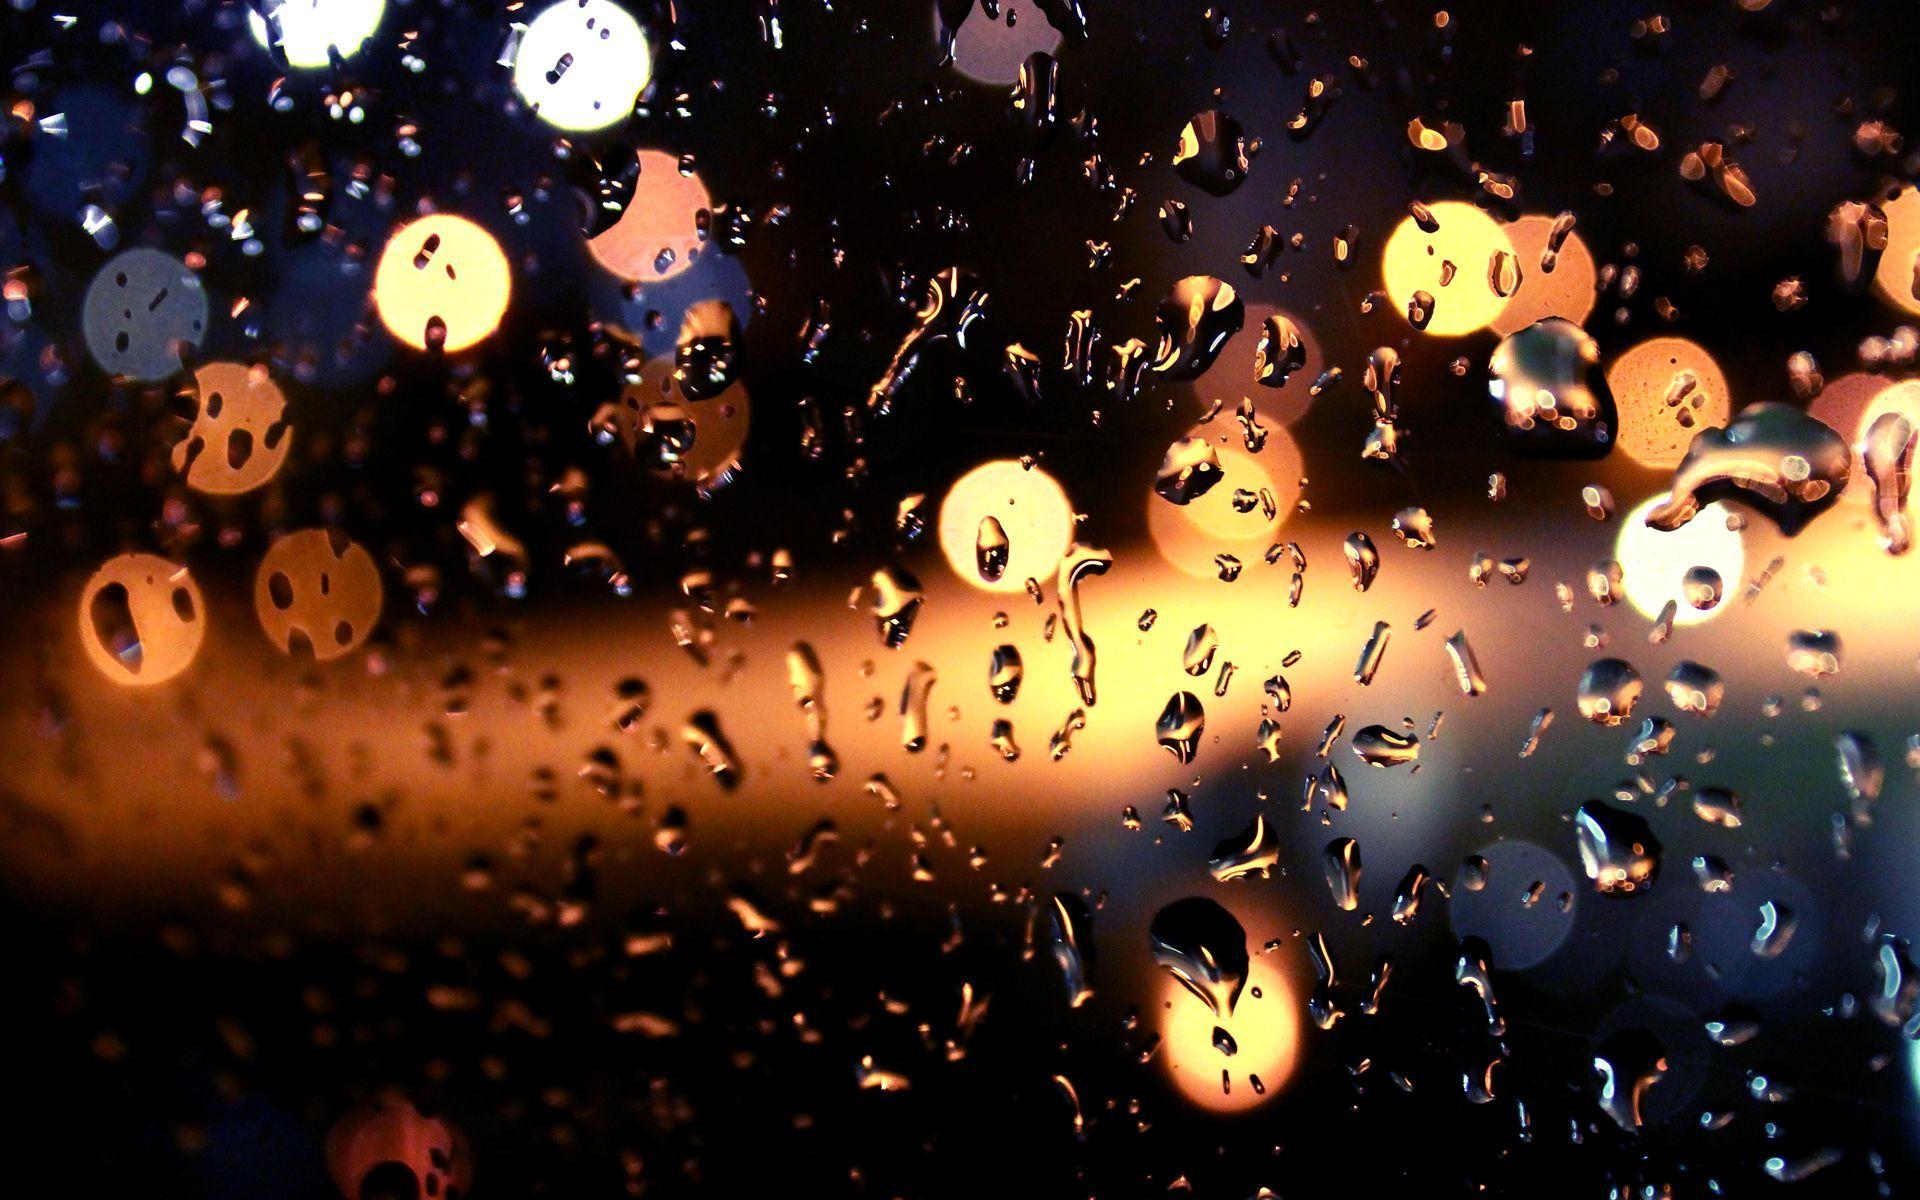 Raindrops Window Lights Wallpaper Hd 50542 52234 Hd